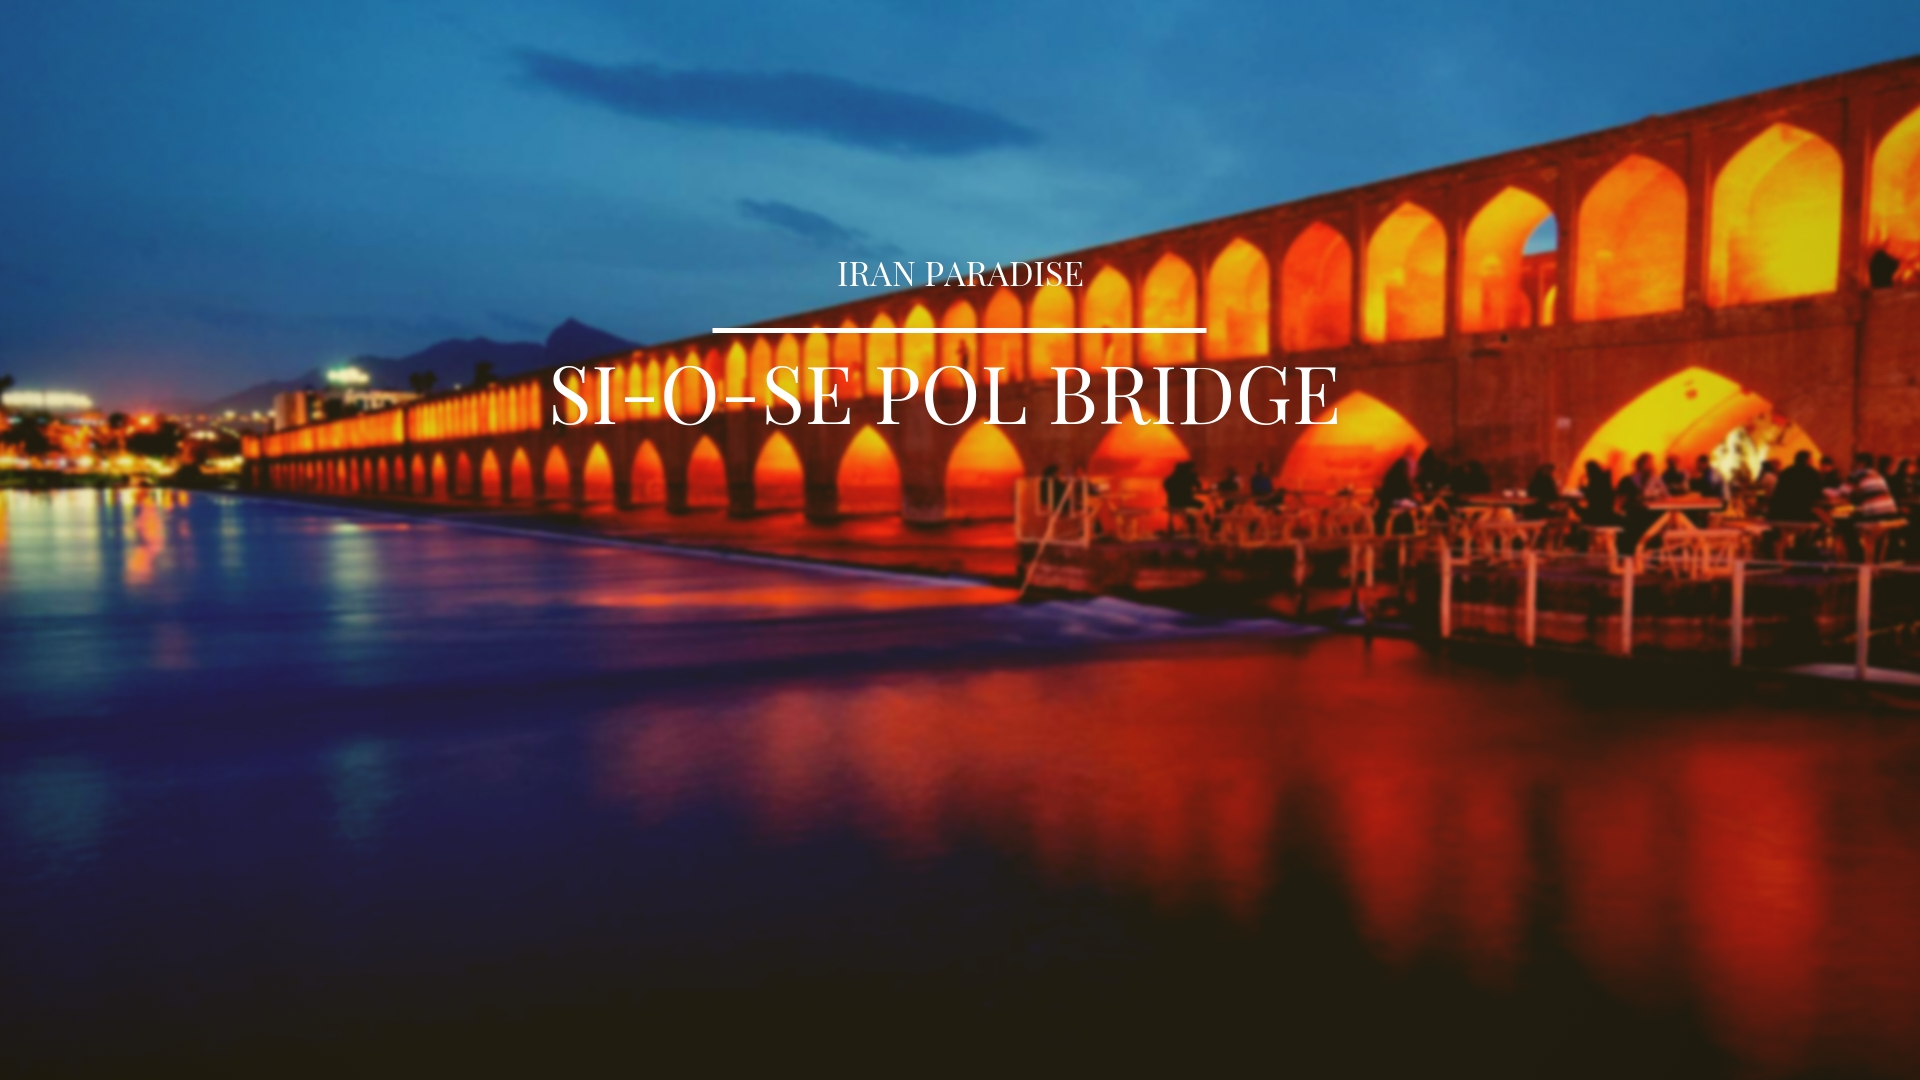 Si-o-se Pol Bridge